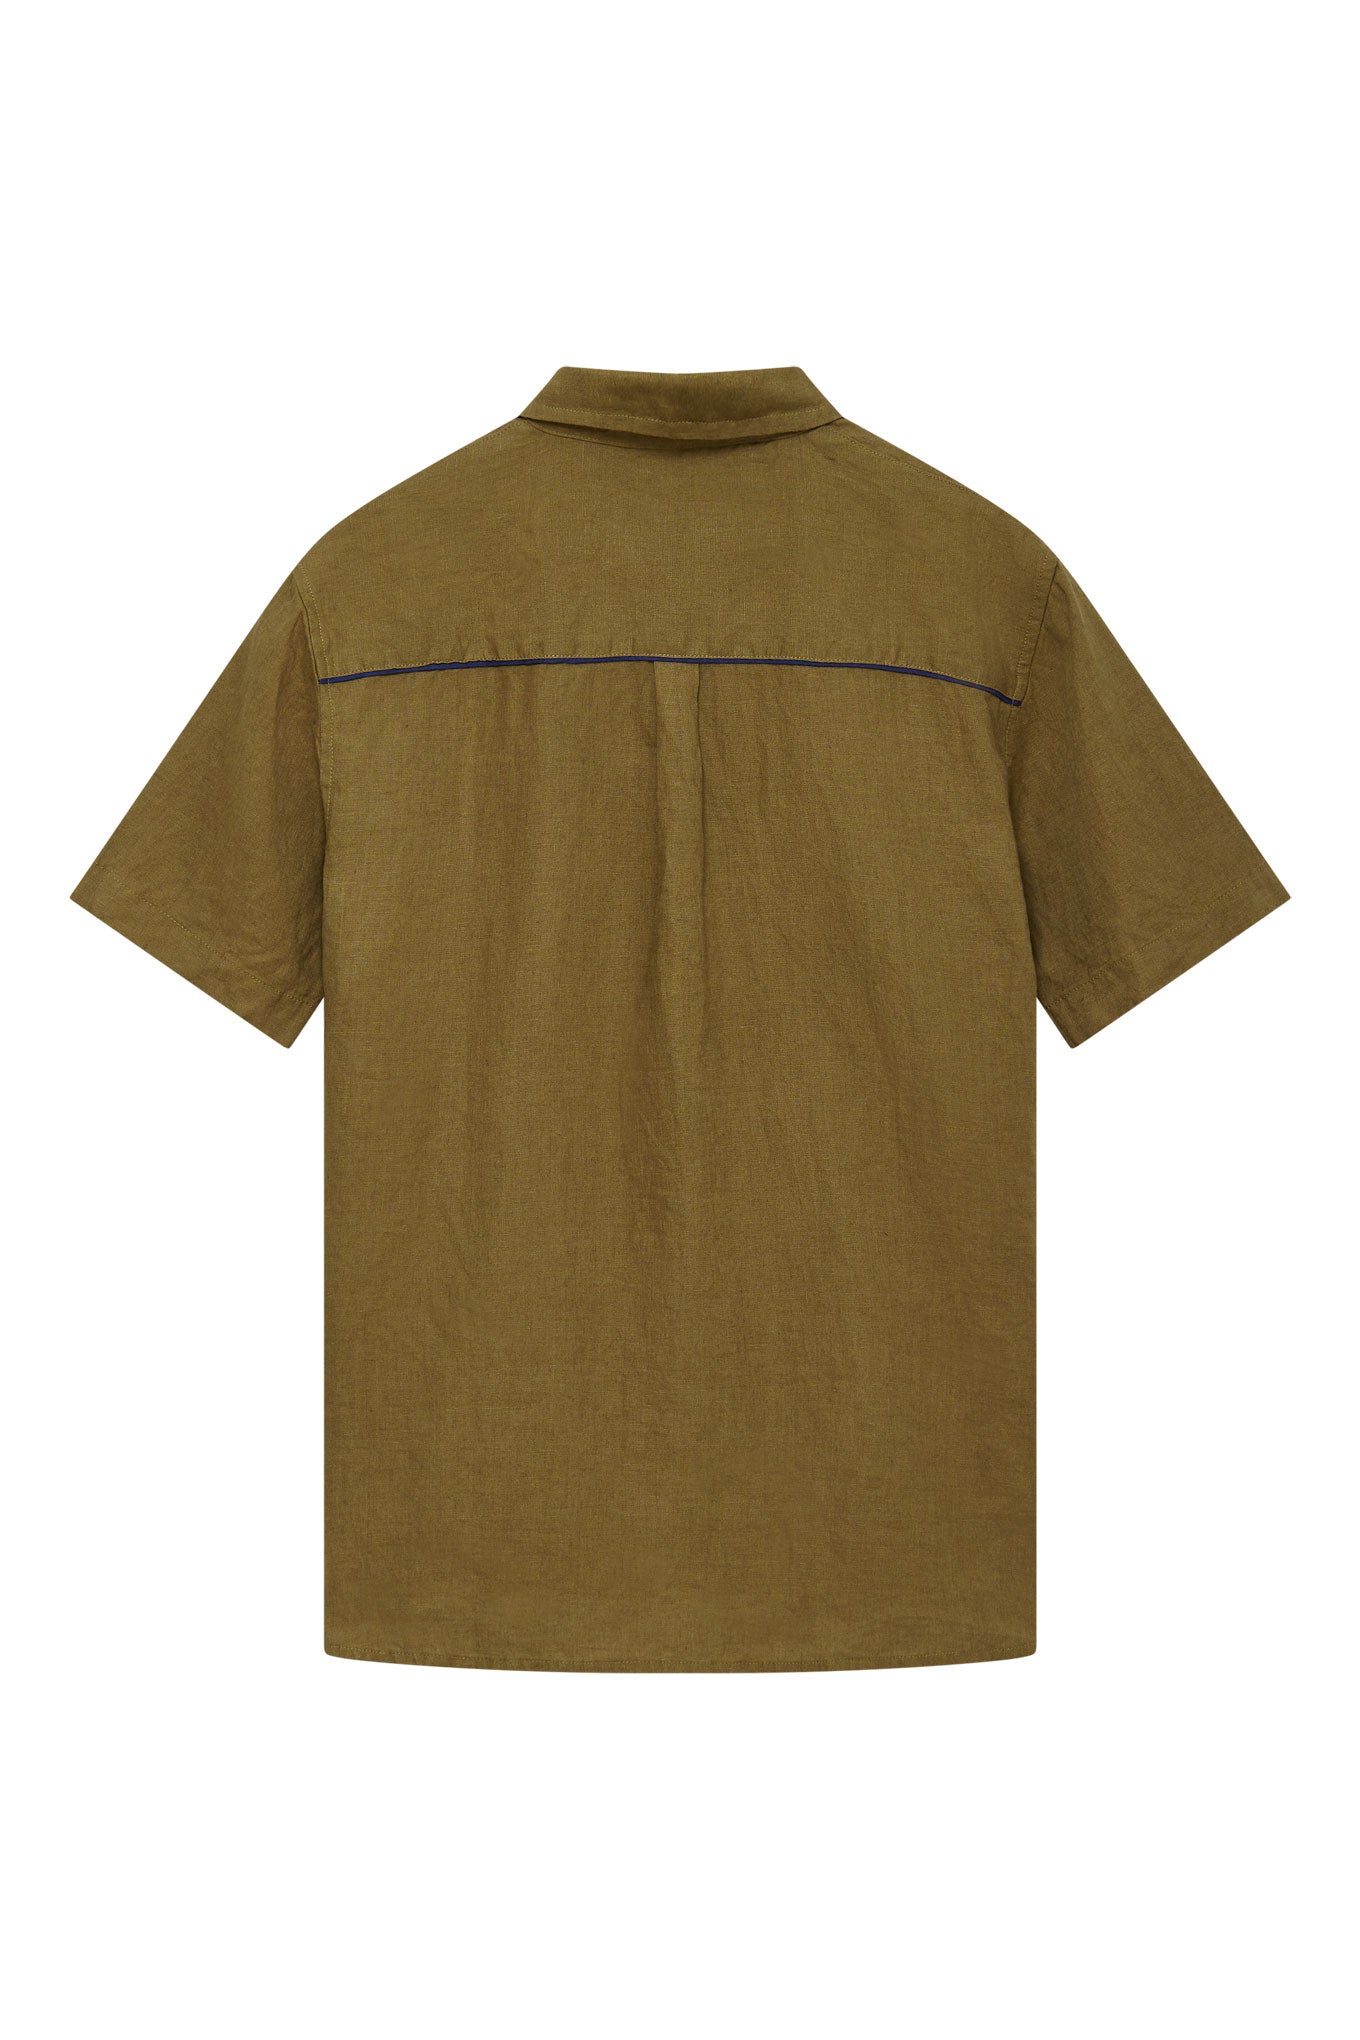 Komodo Dingwalls Linen Shirt - Khaki